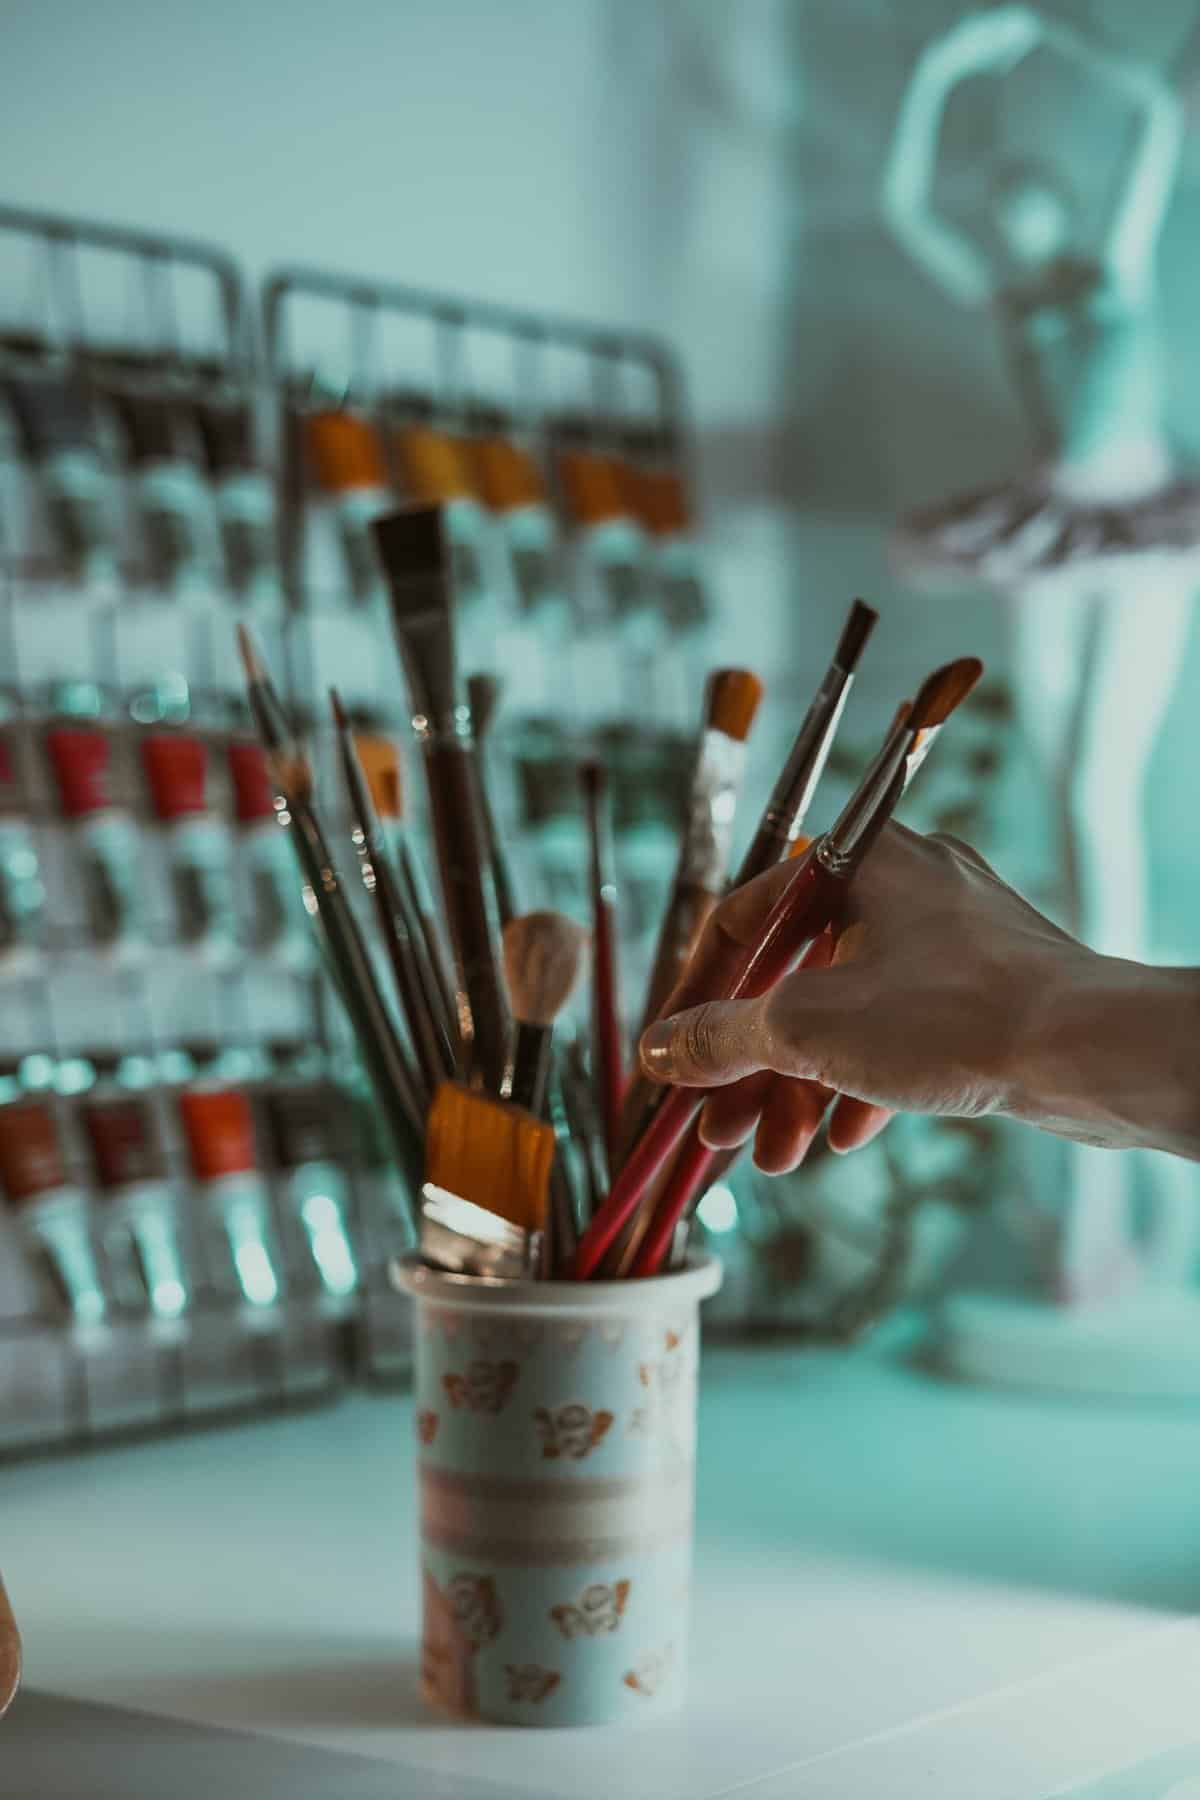 Decorative Vase with paint brushes